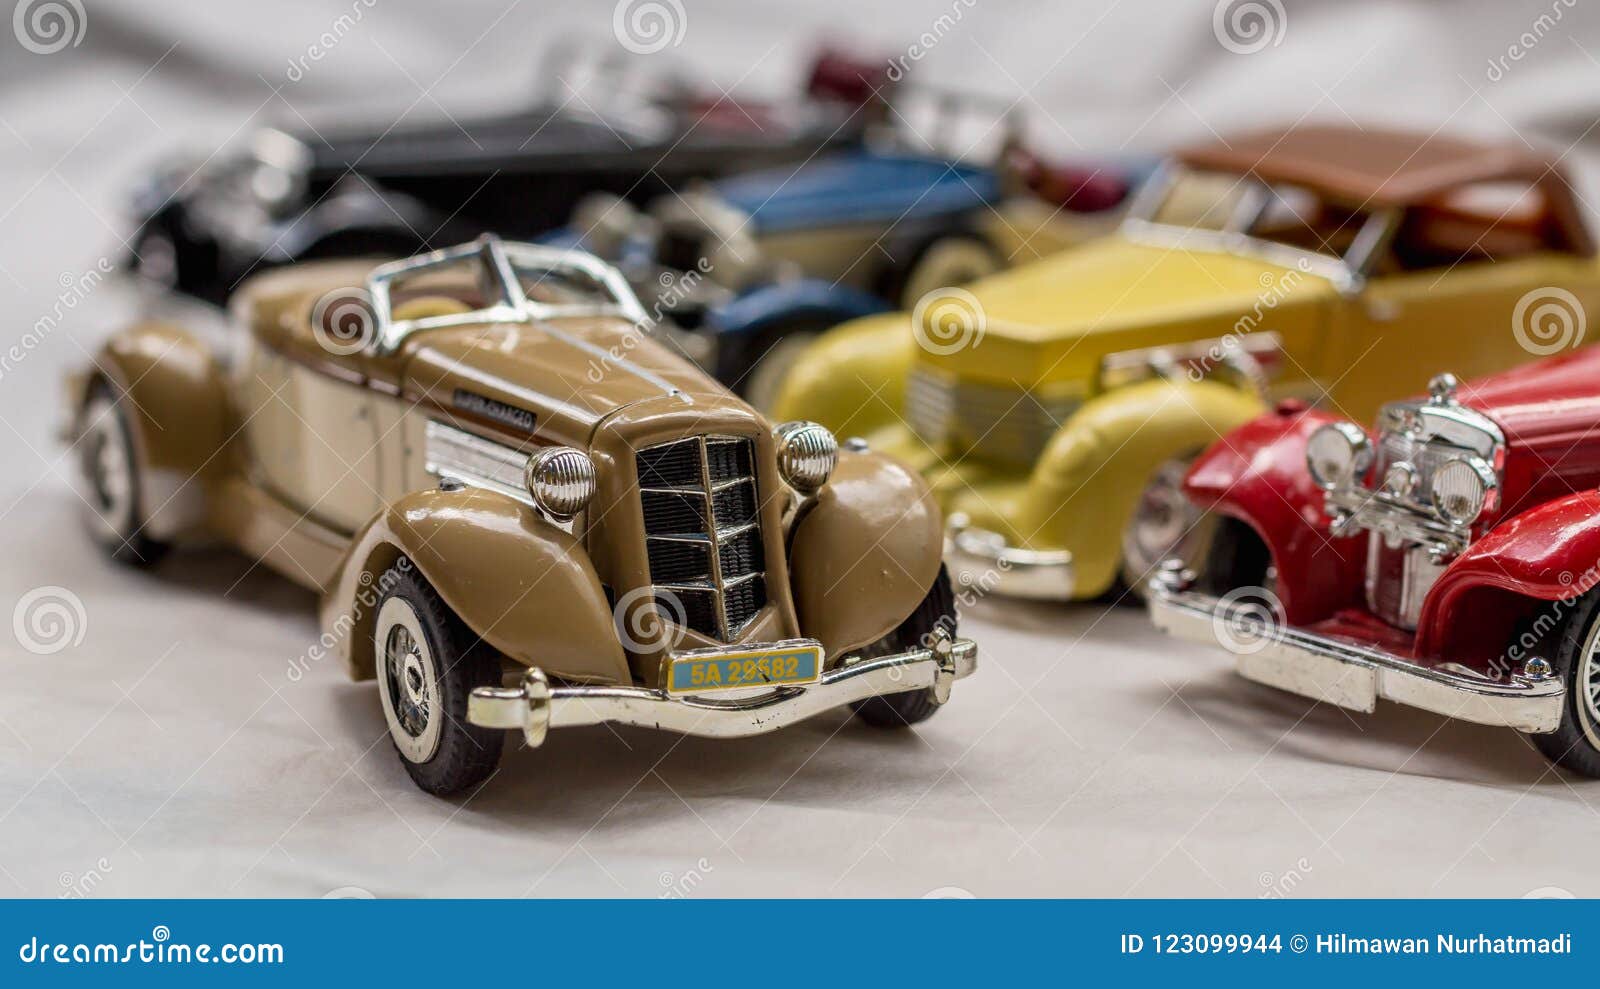 classic car toy models